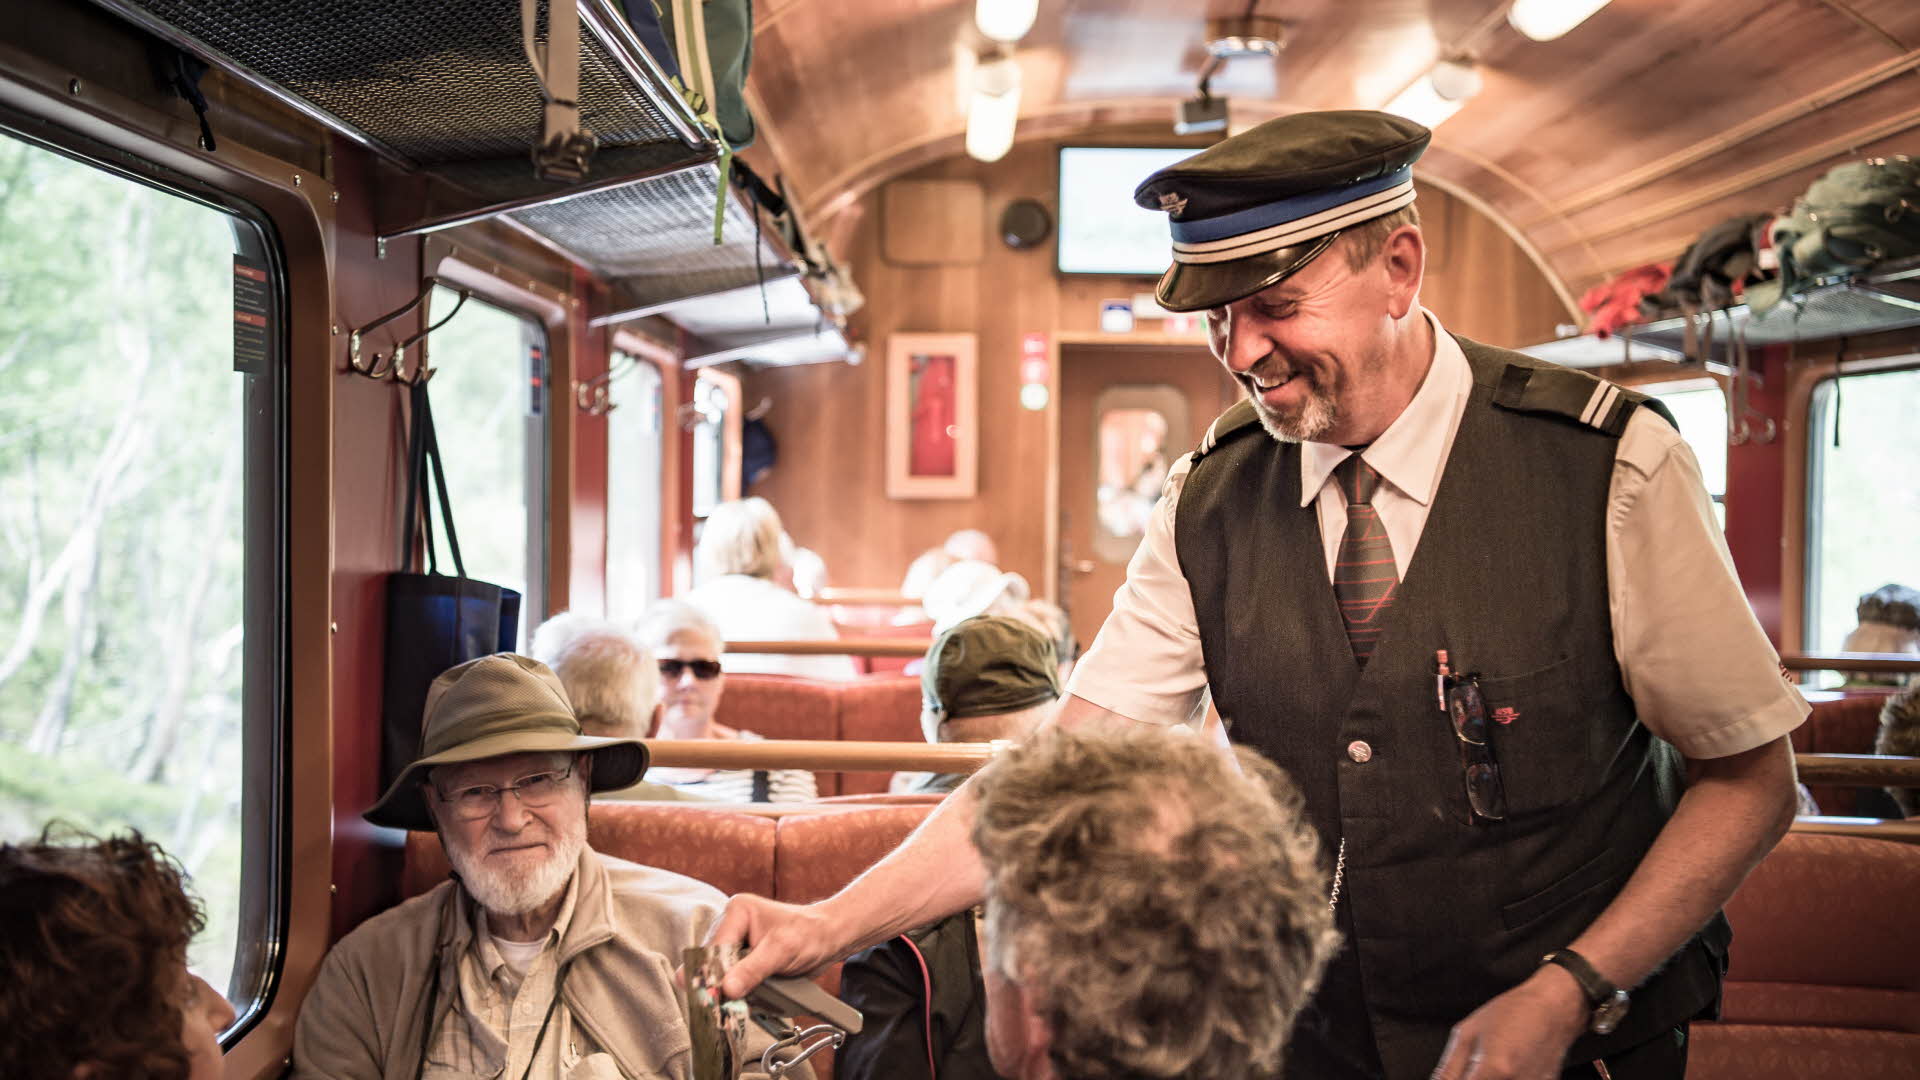 A conductor checks tickets on the Flåm Railway